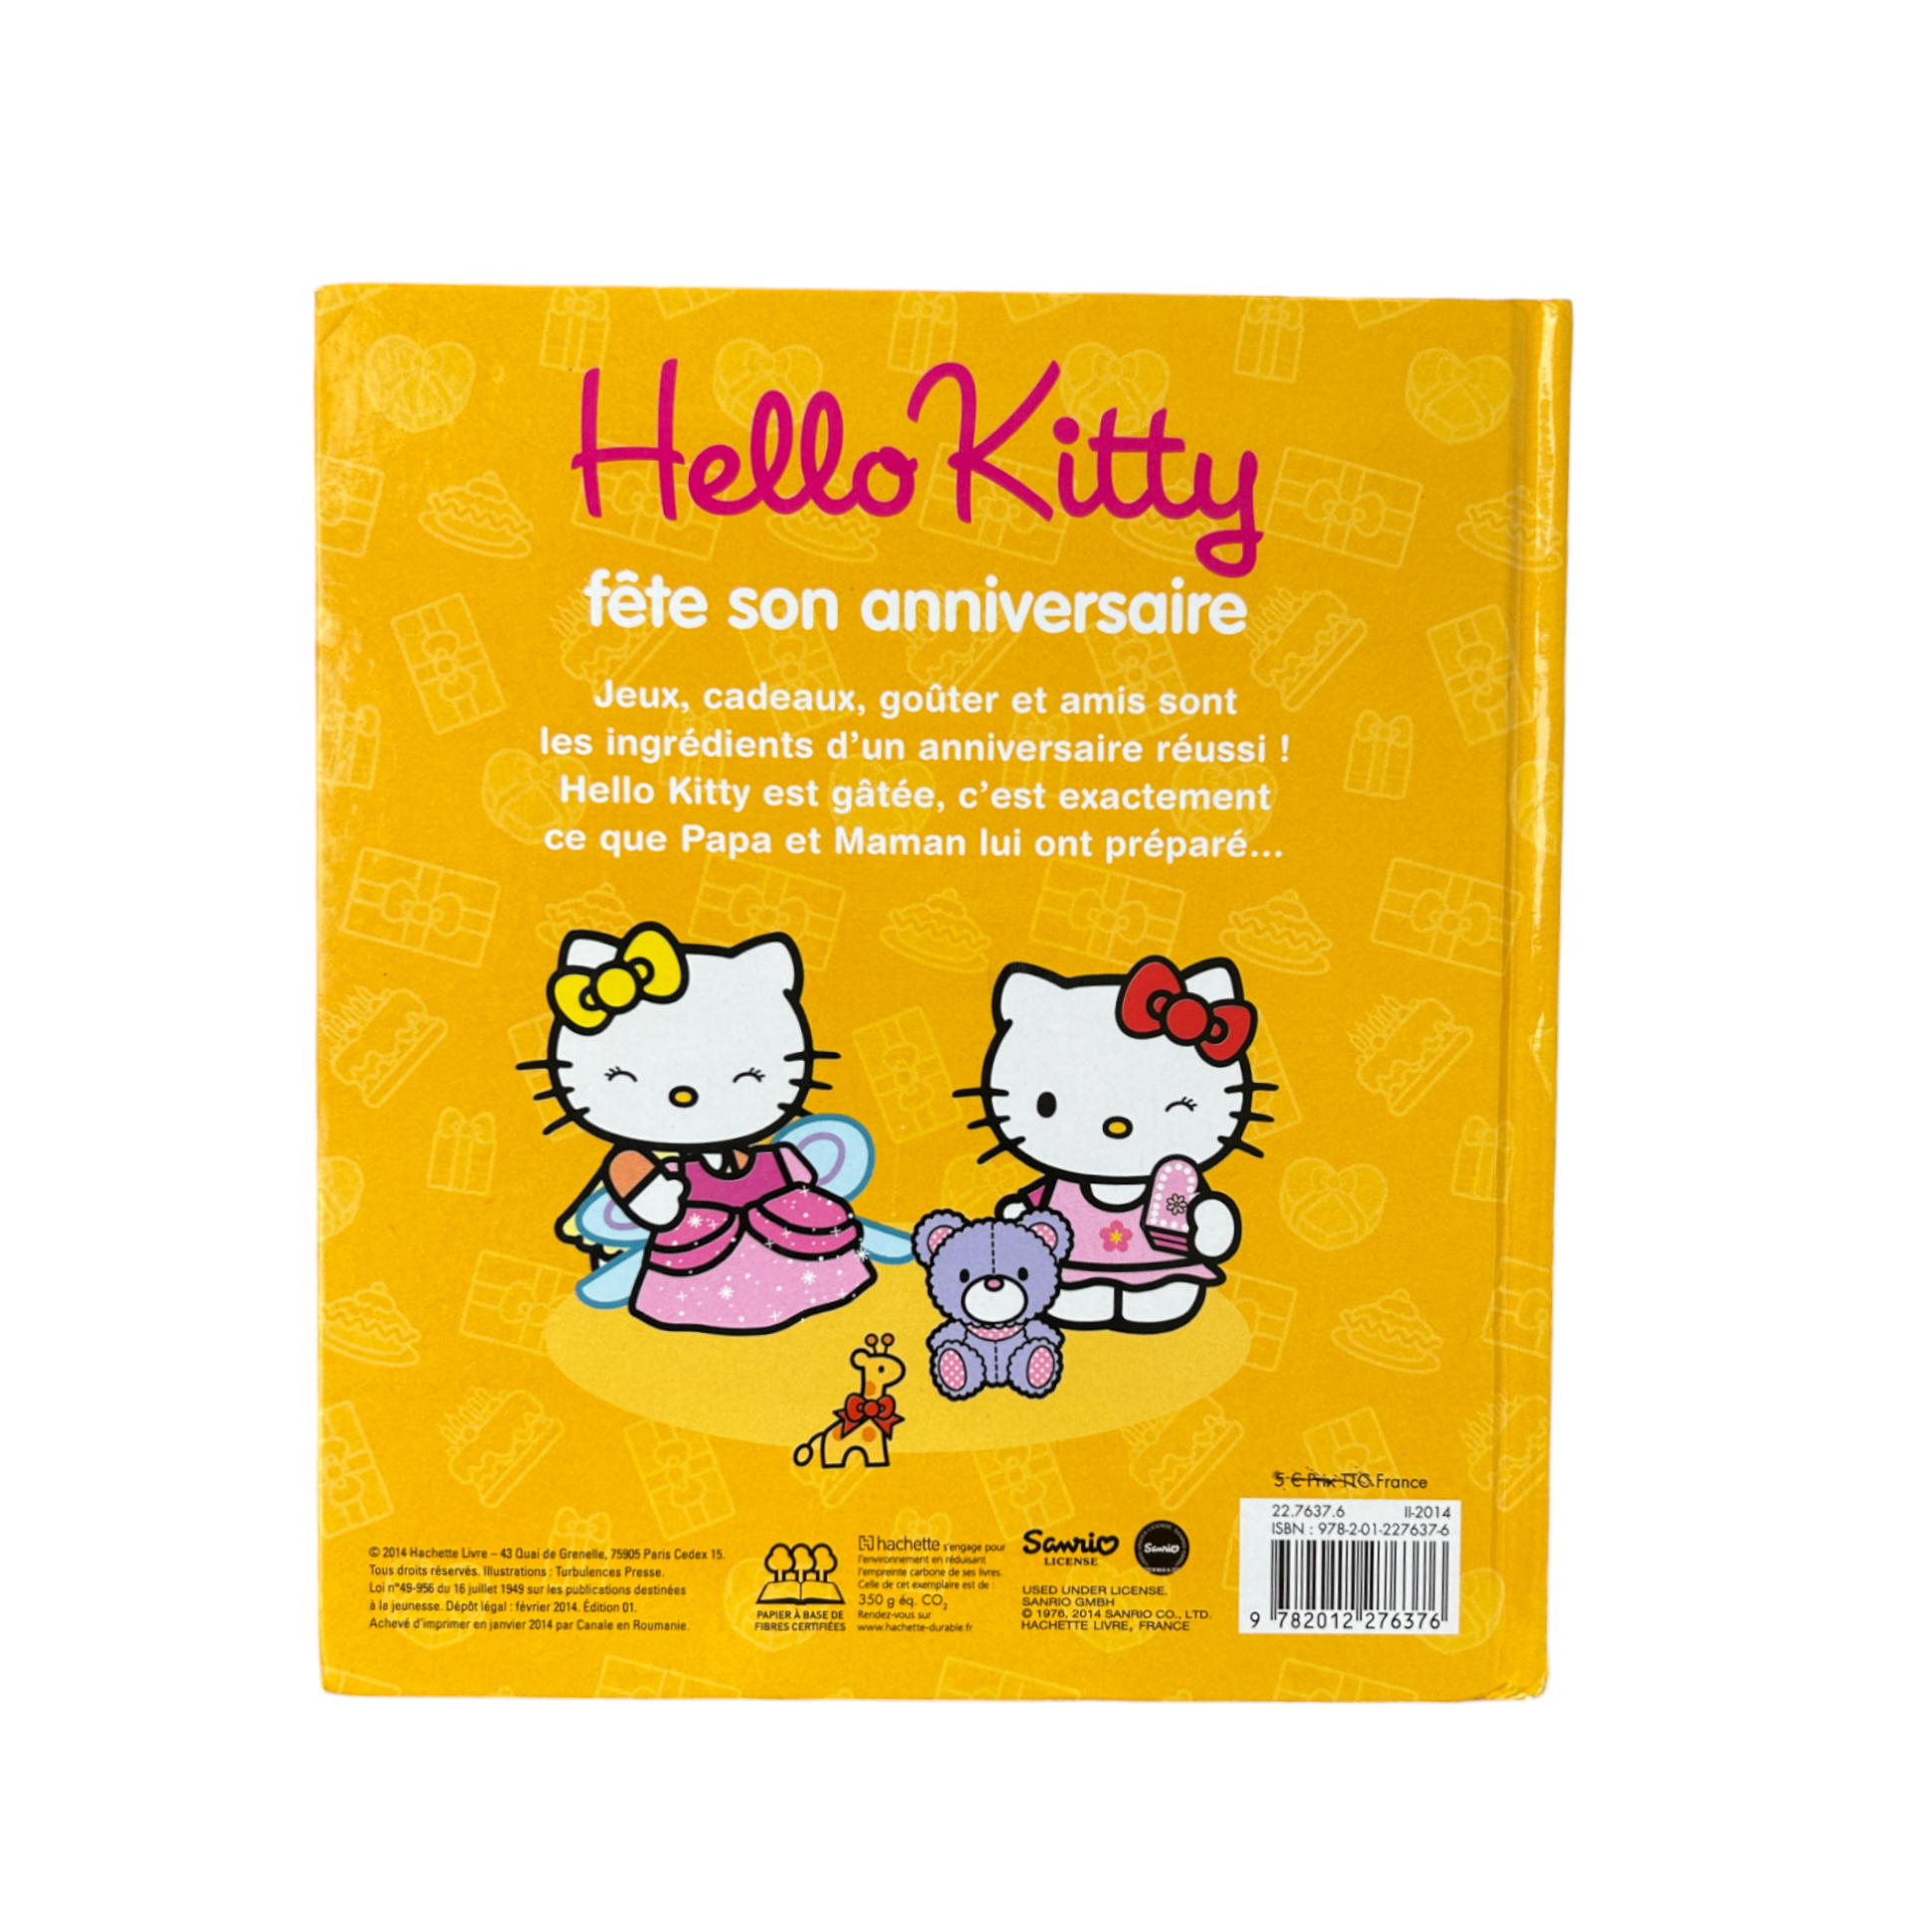 Hello Kitty fête son anniversaire